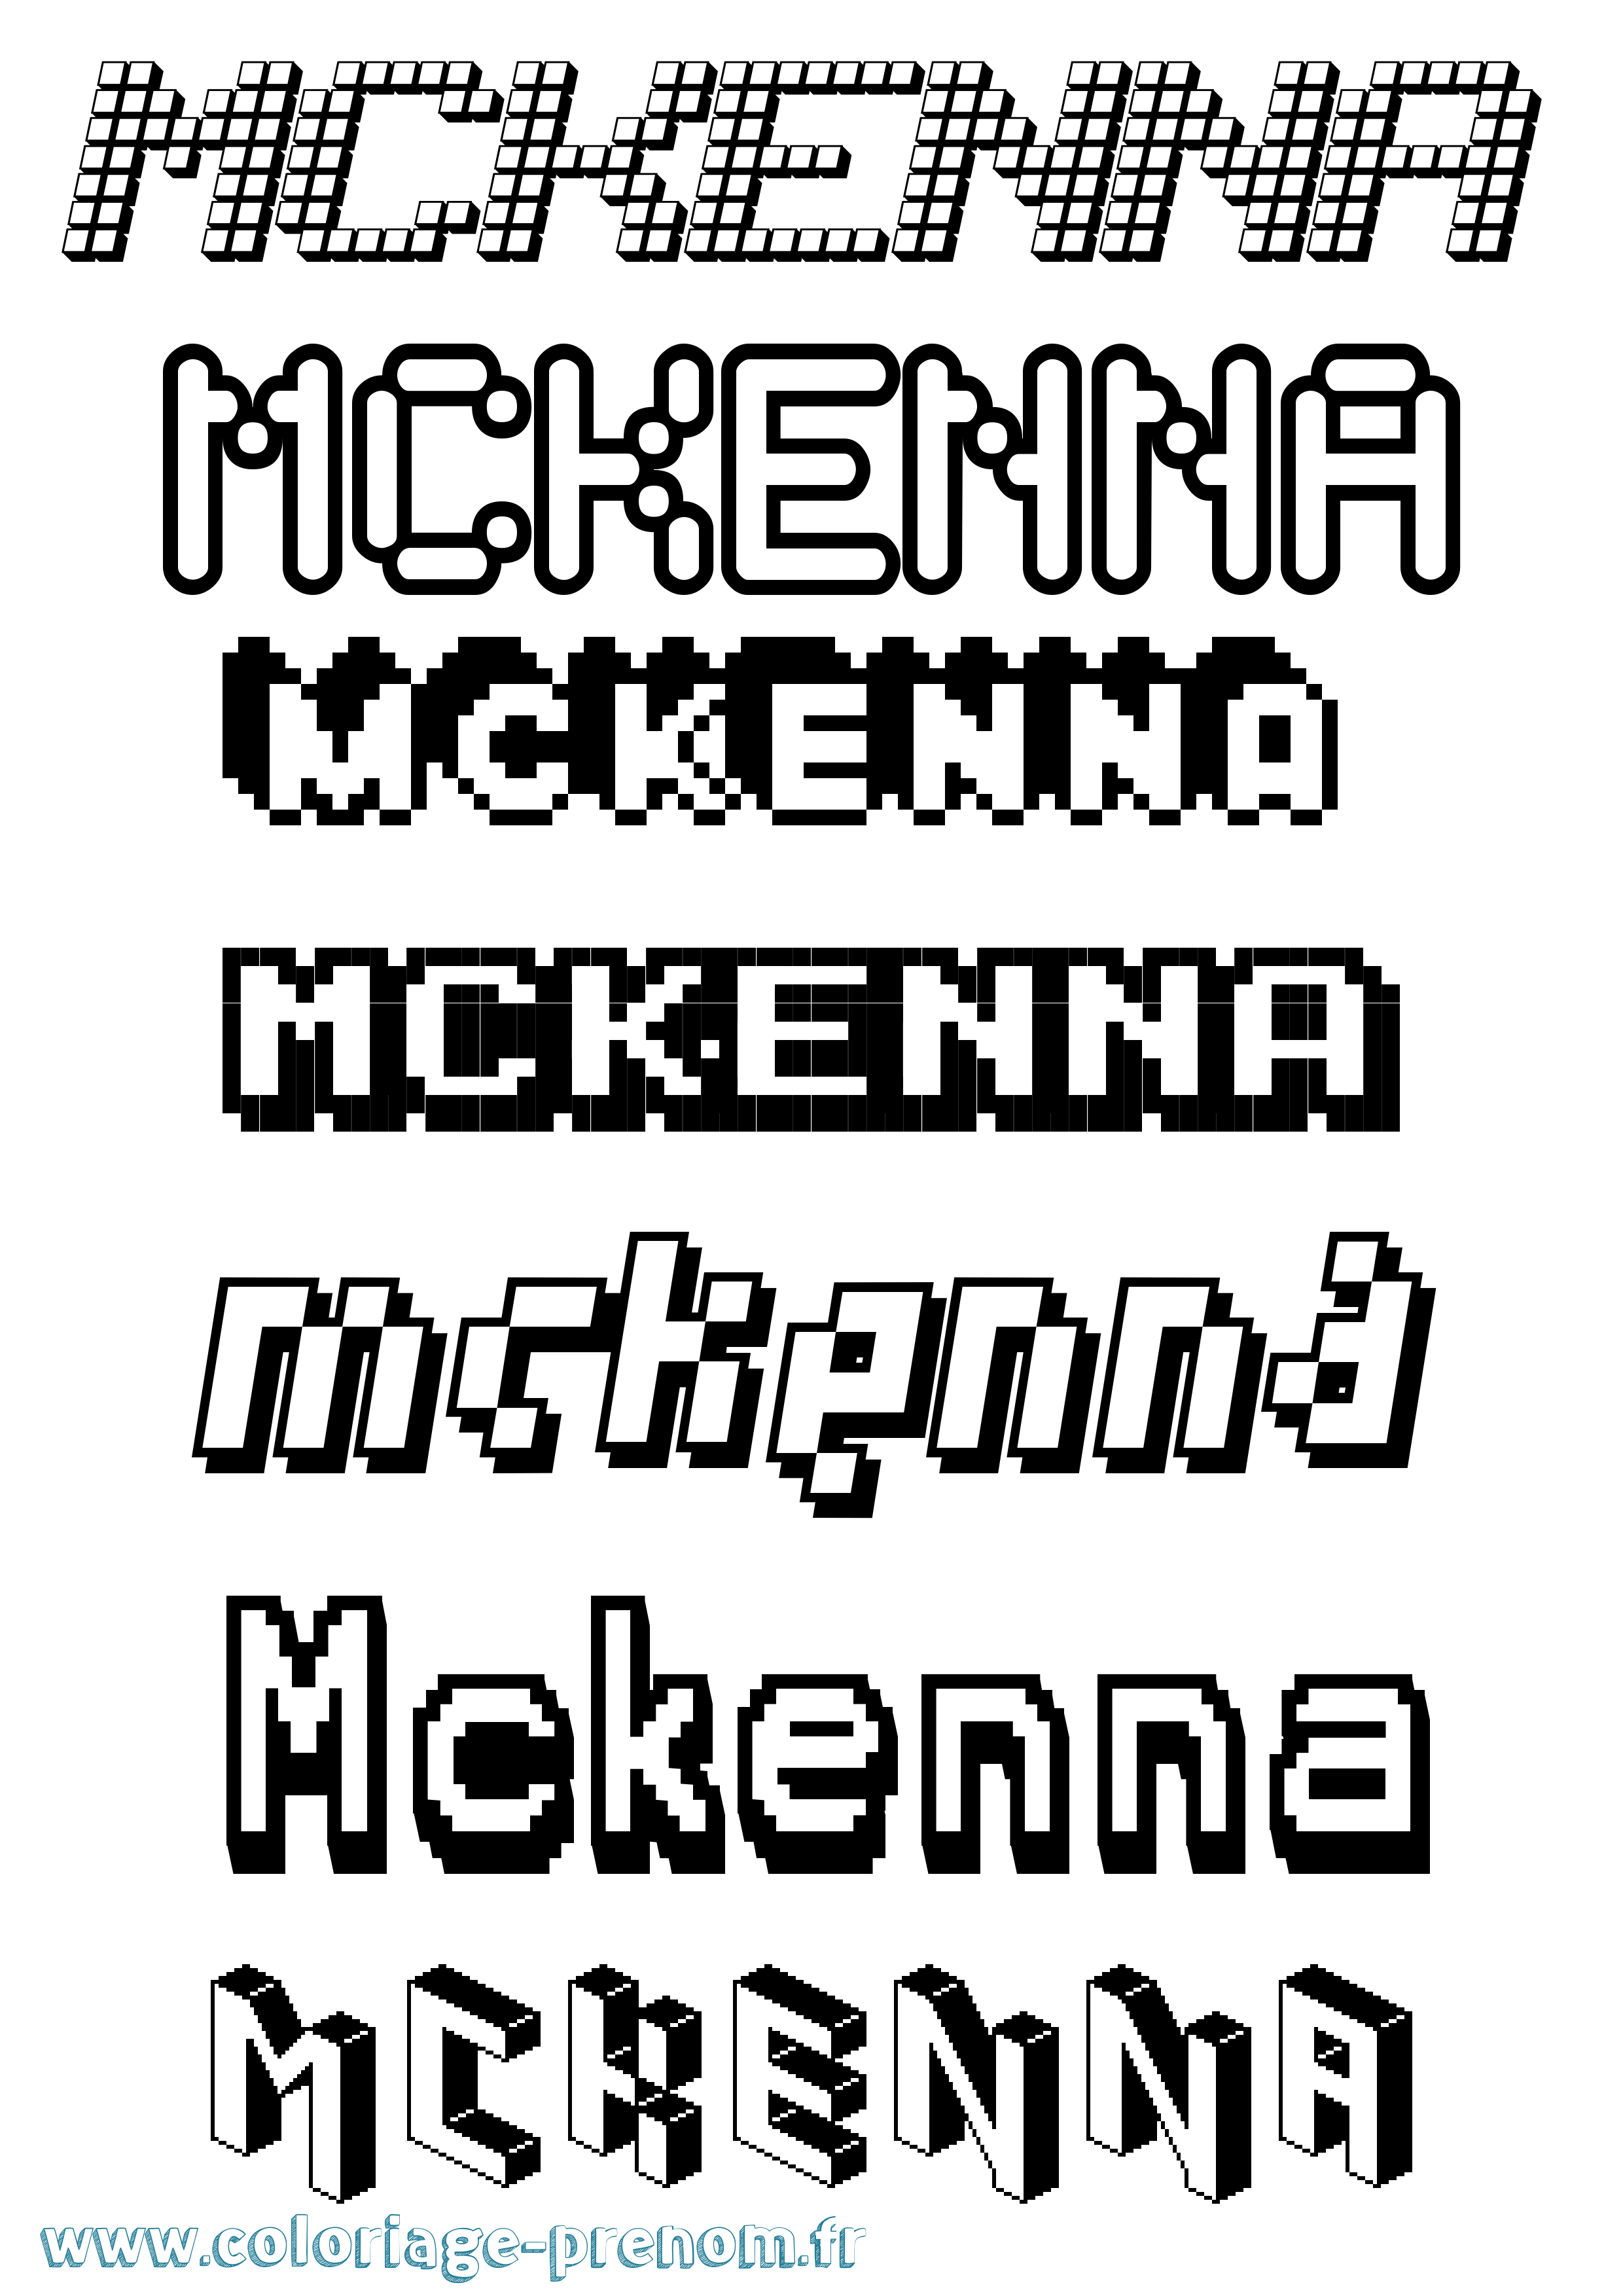 Coloriage prénom Mckenna Pixel